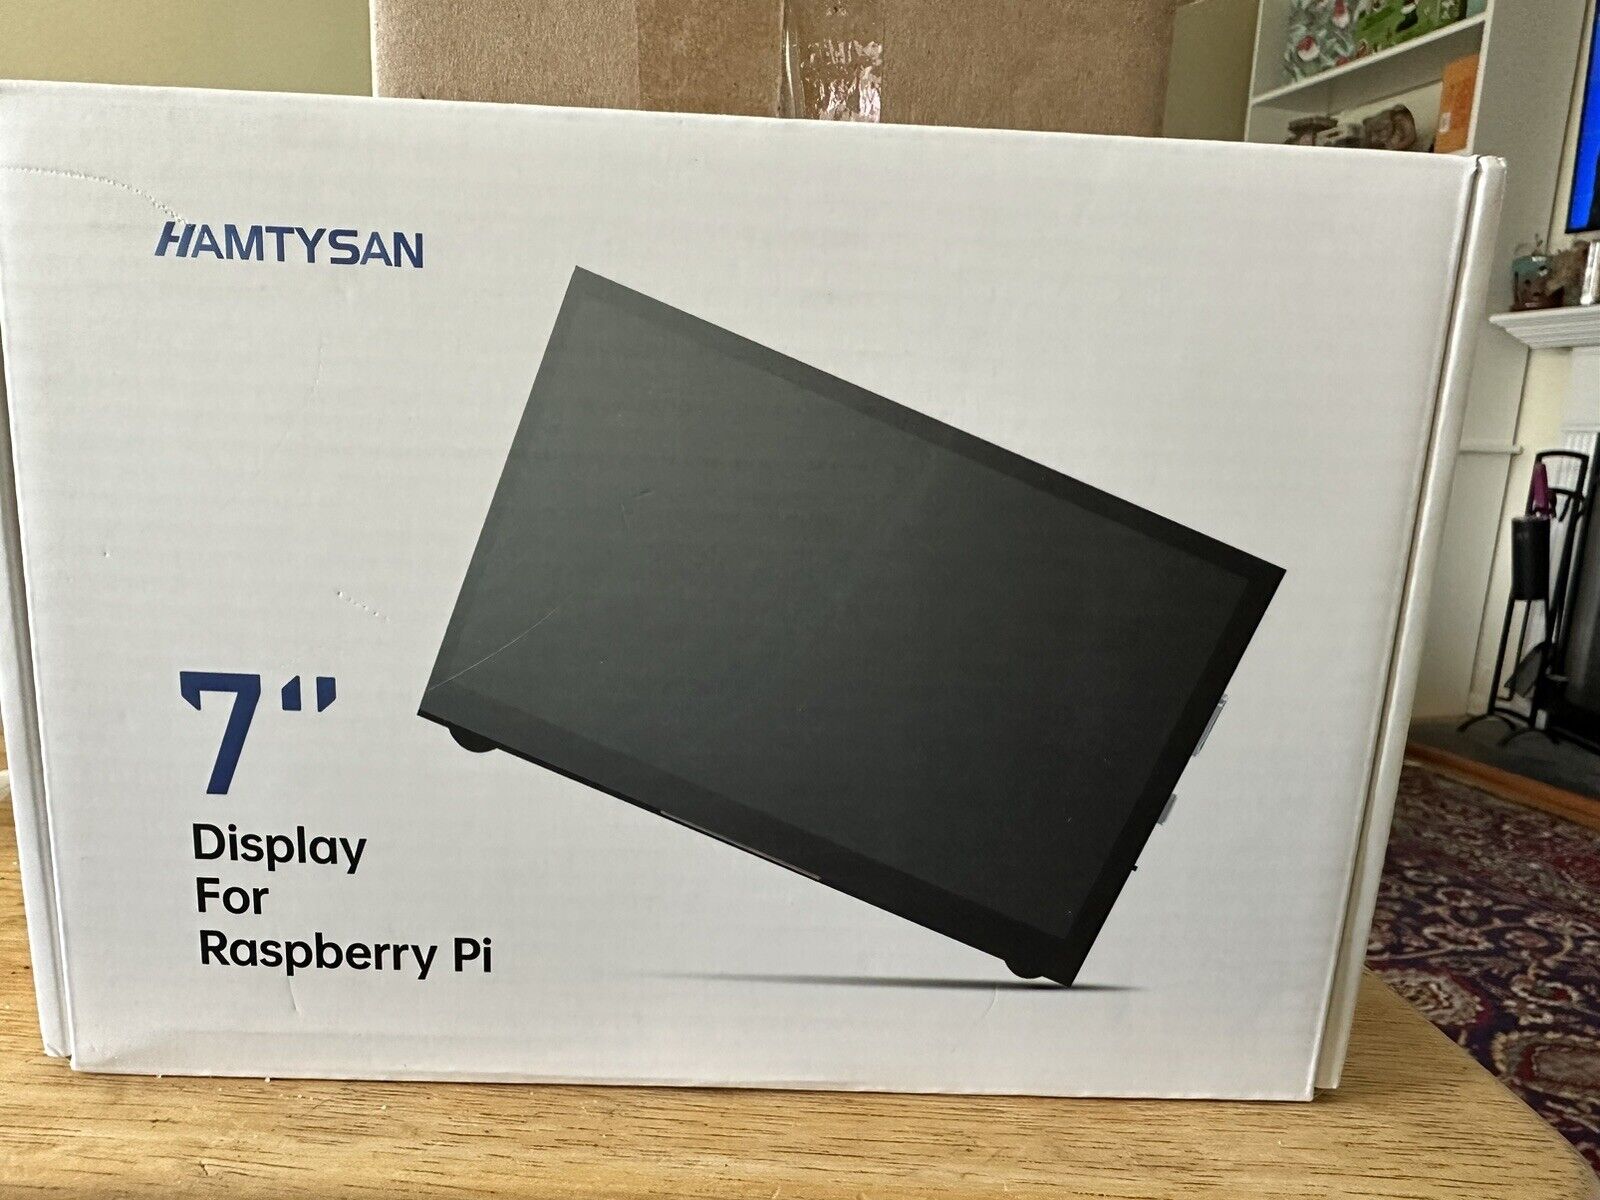 HAMTYSAN Raspberry Pi Screen 7 Inch LCD Screen Display NEW IN BOX - Never Opened